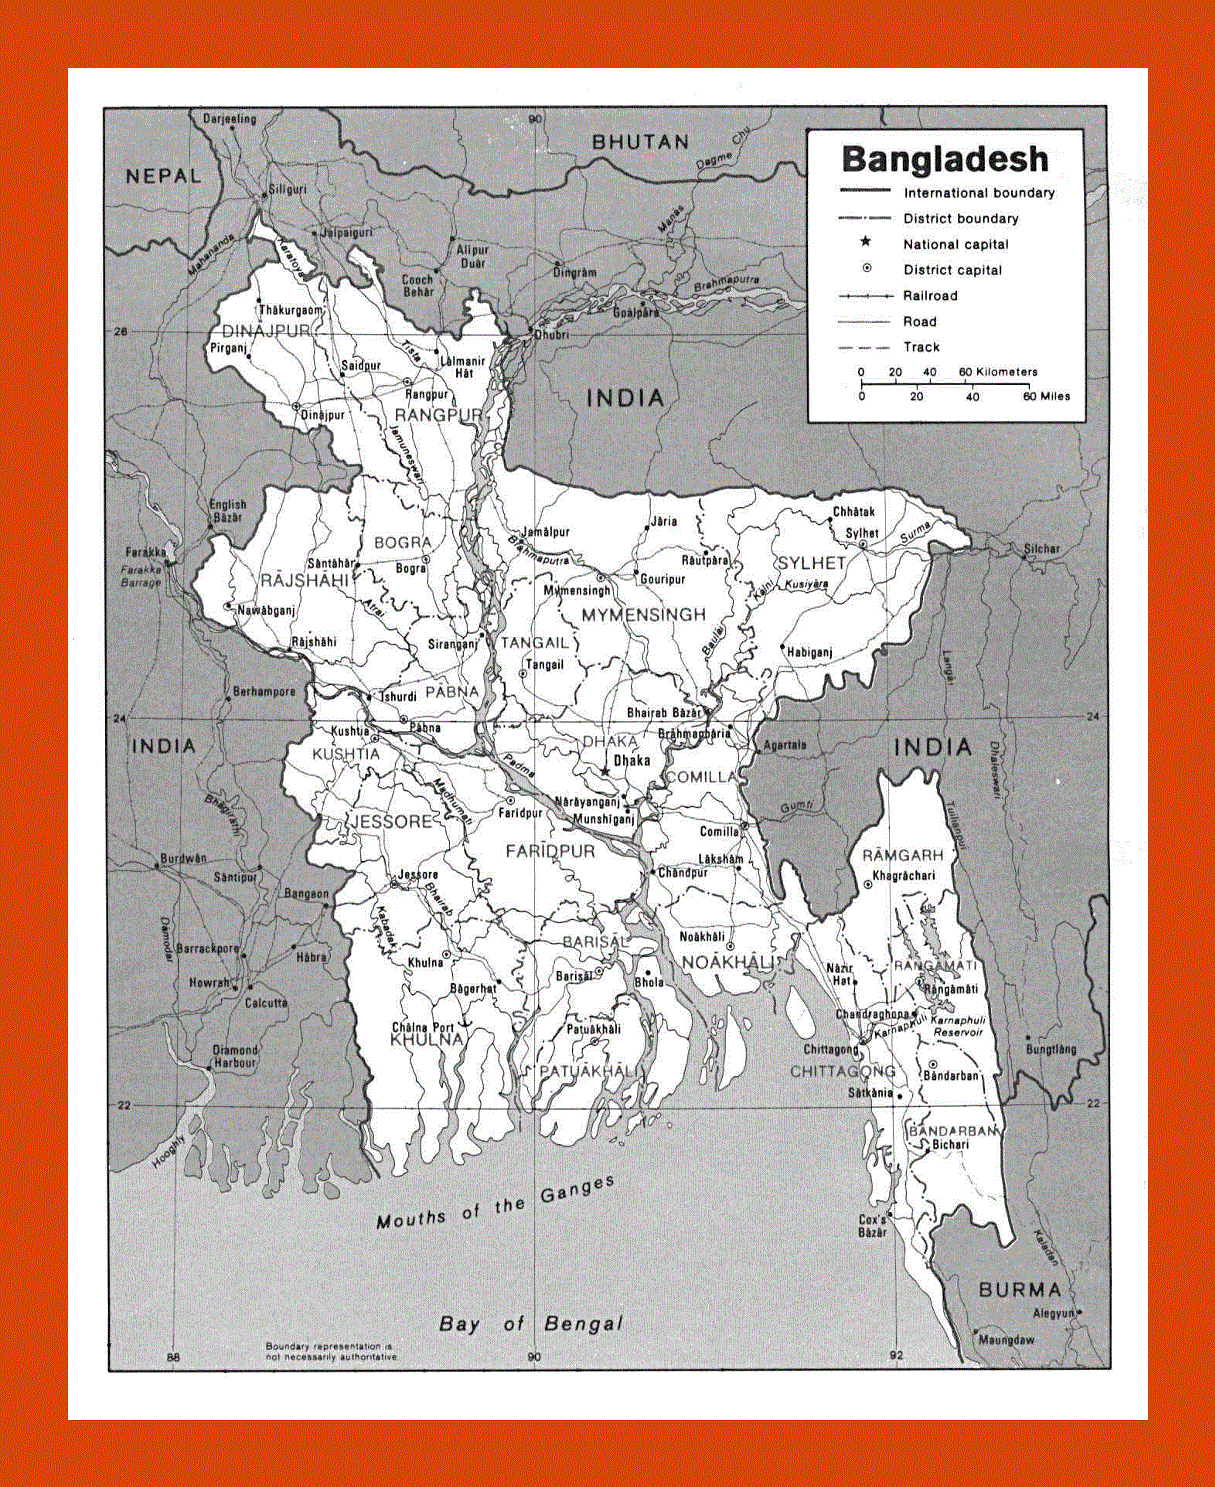 Political and administrative map of Bangladesh